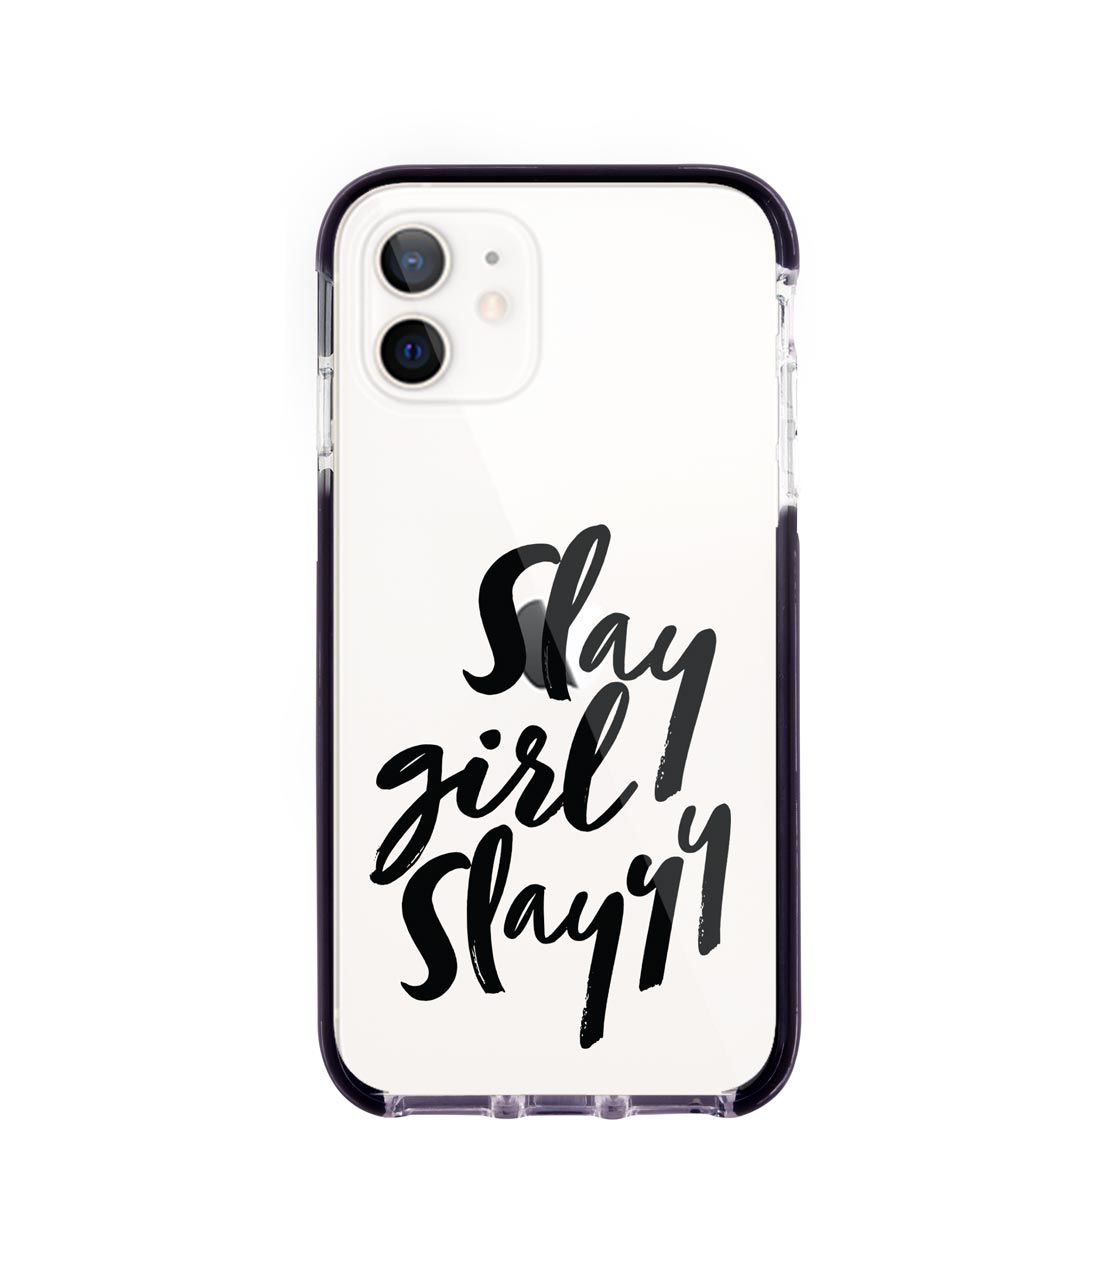 Slay girl Slay - Extreme Case for iPhone 12